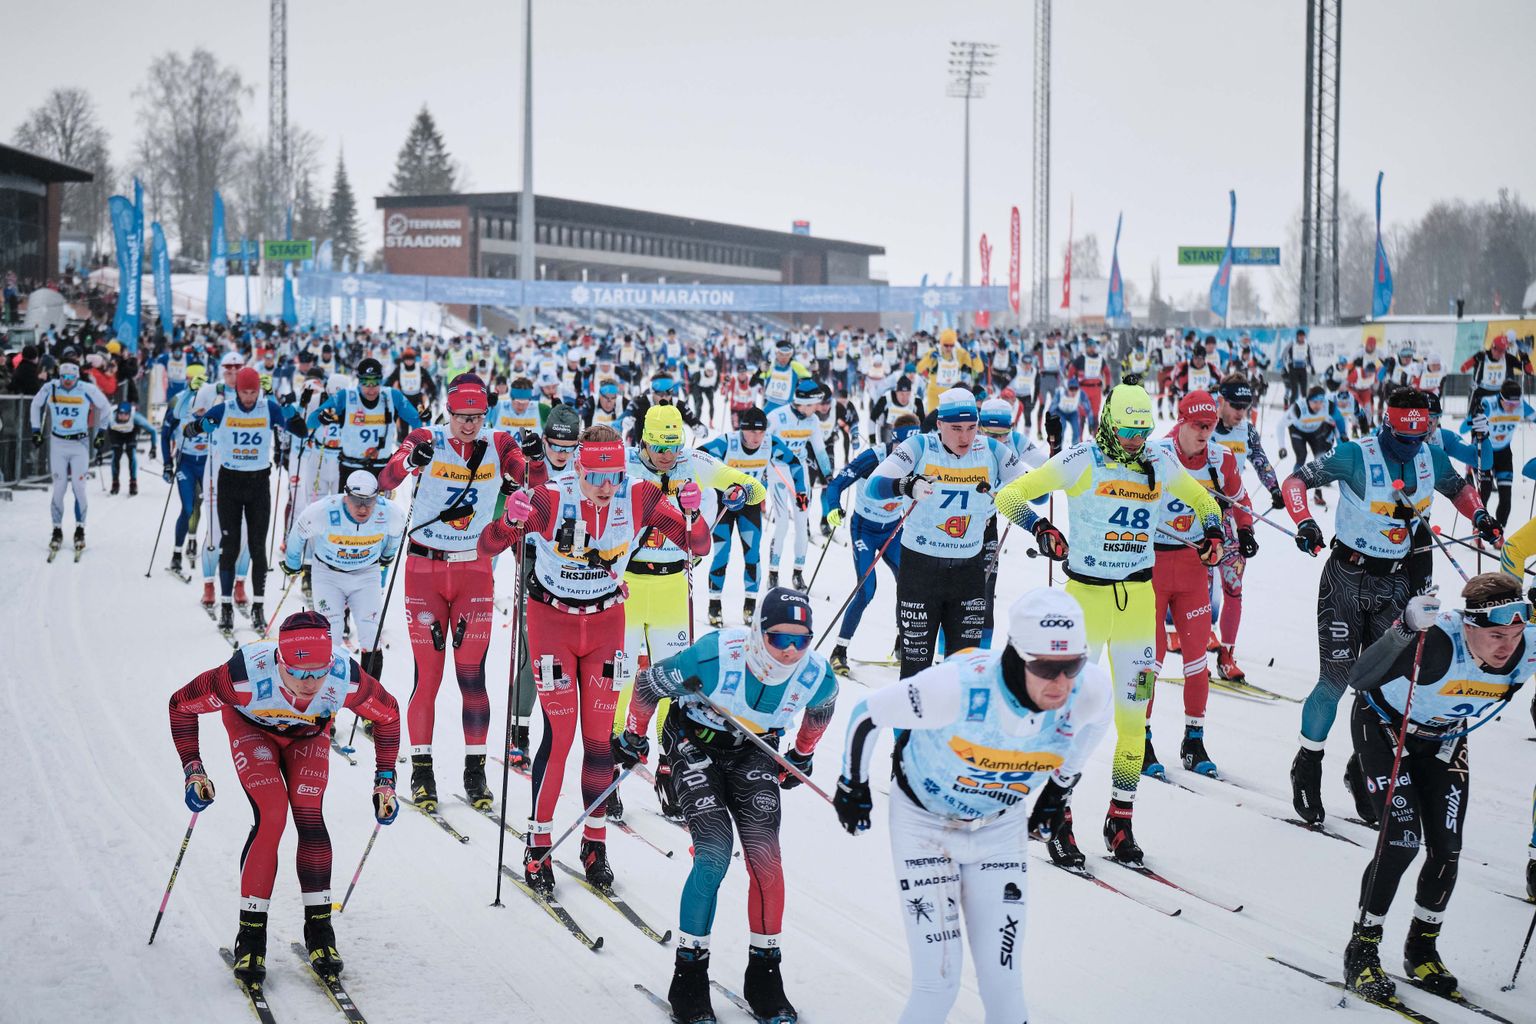 Tartu Maraton to take place in full length, on original track